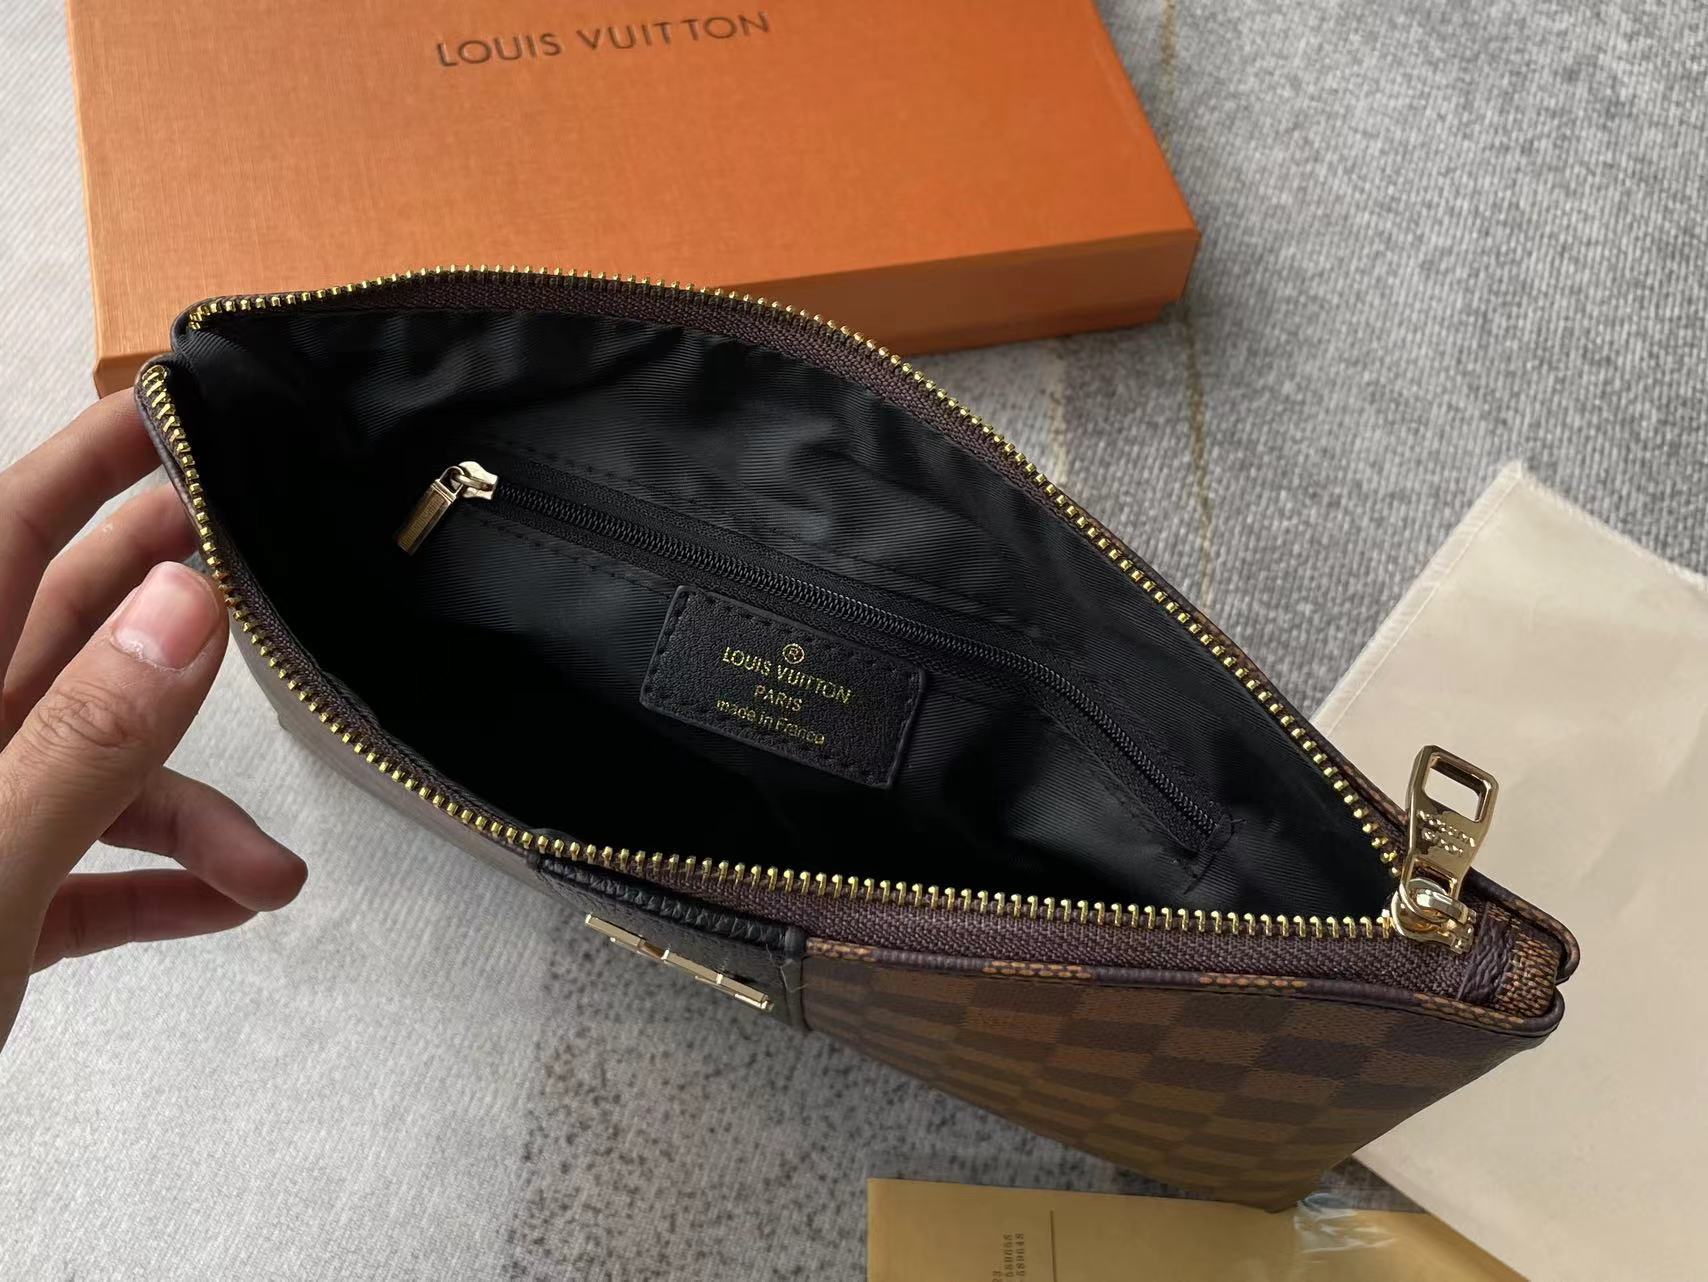 Louis vuitton handbag (wristlet   bag)